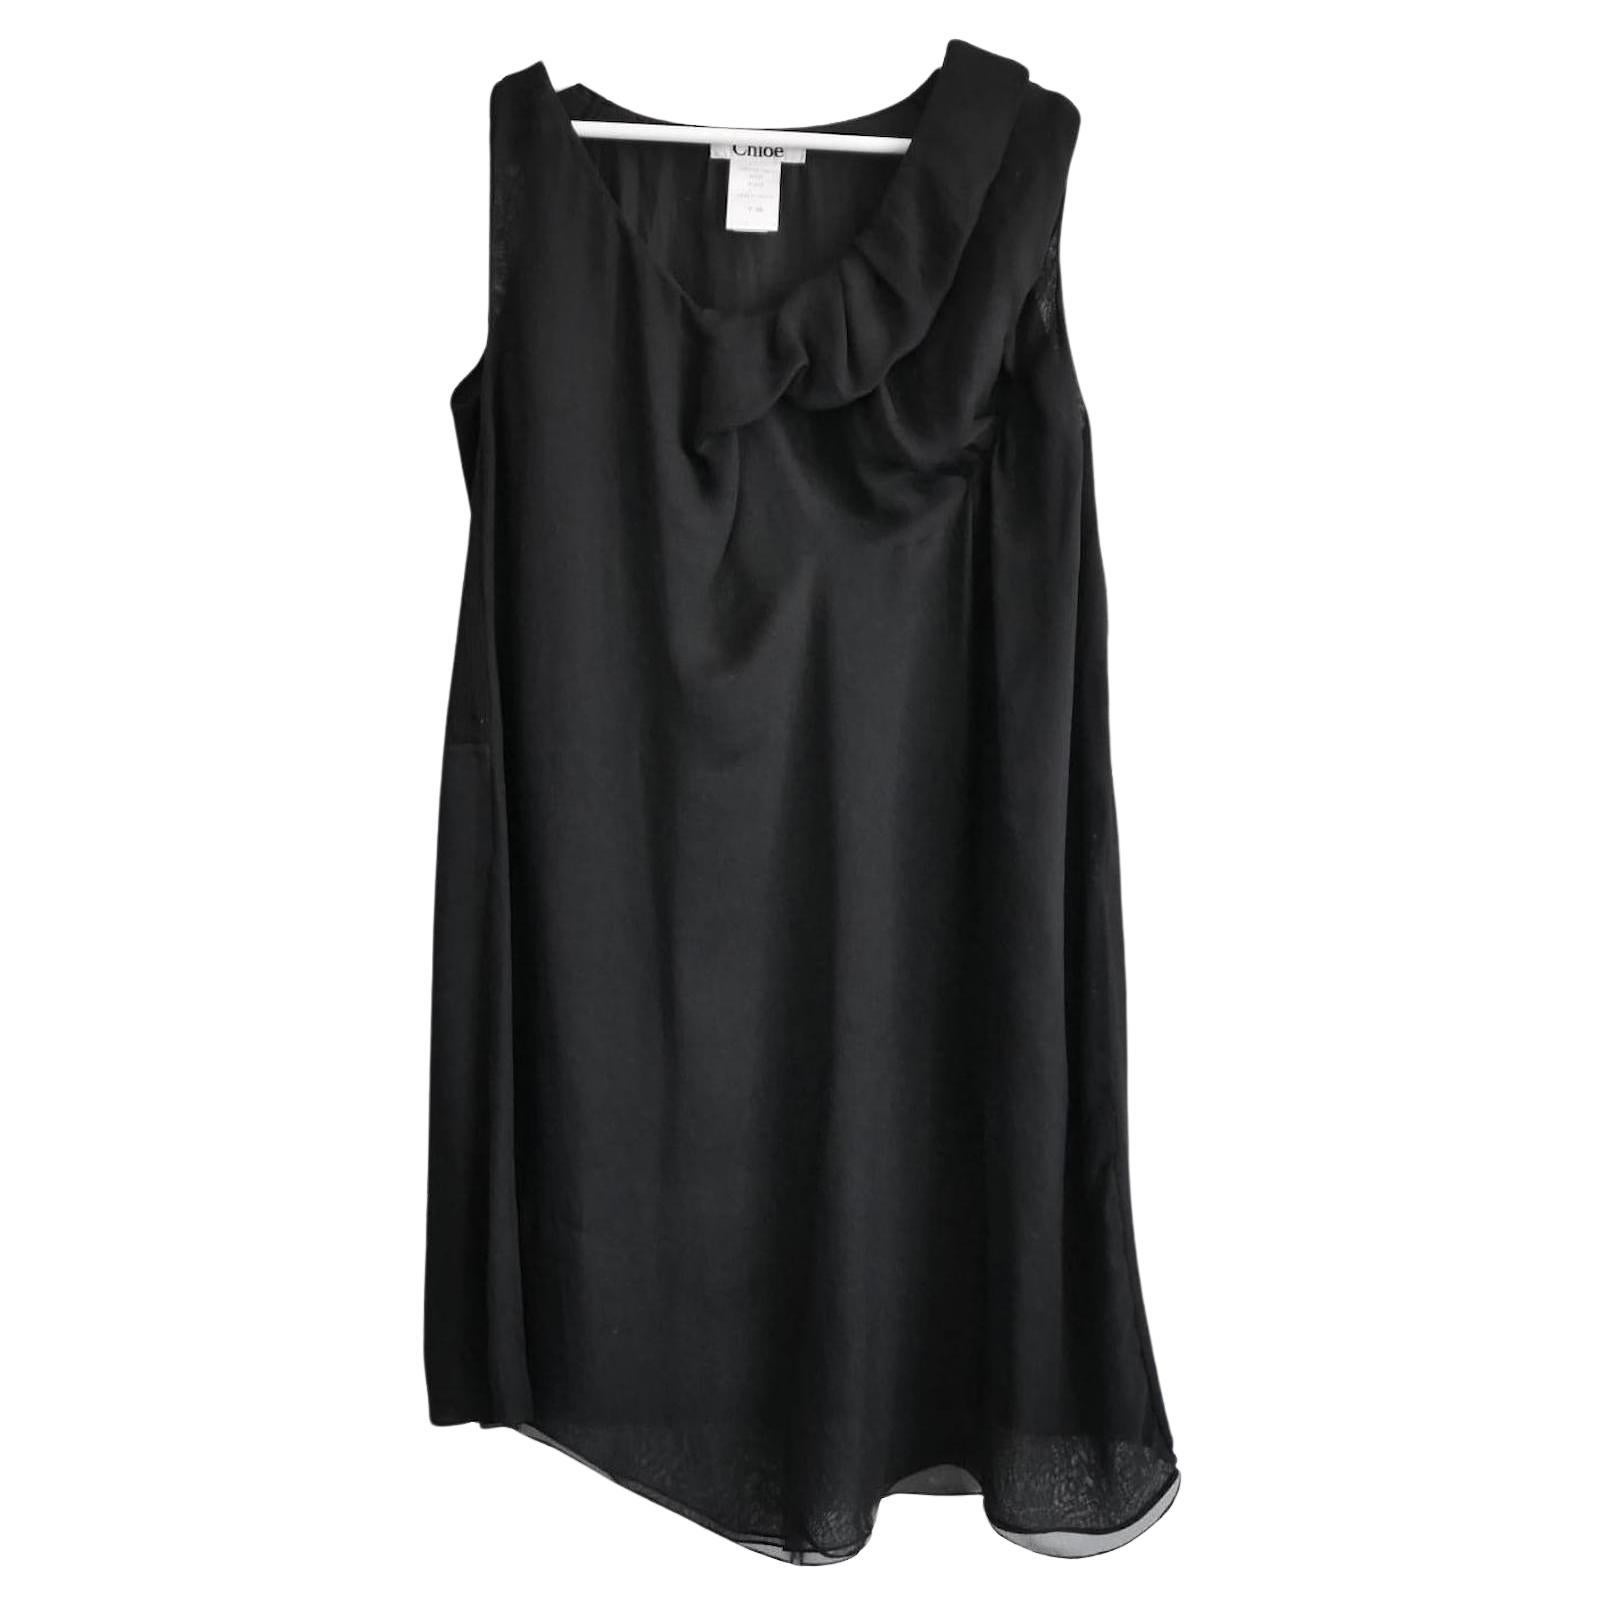 Chloé Fall 2007 Black Silk Chiffon Mixed Panel Dress For Sale